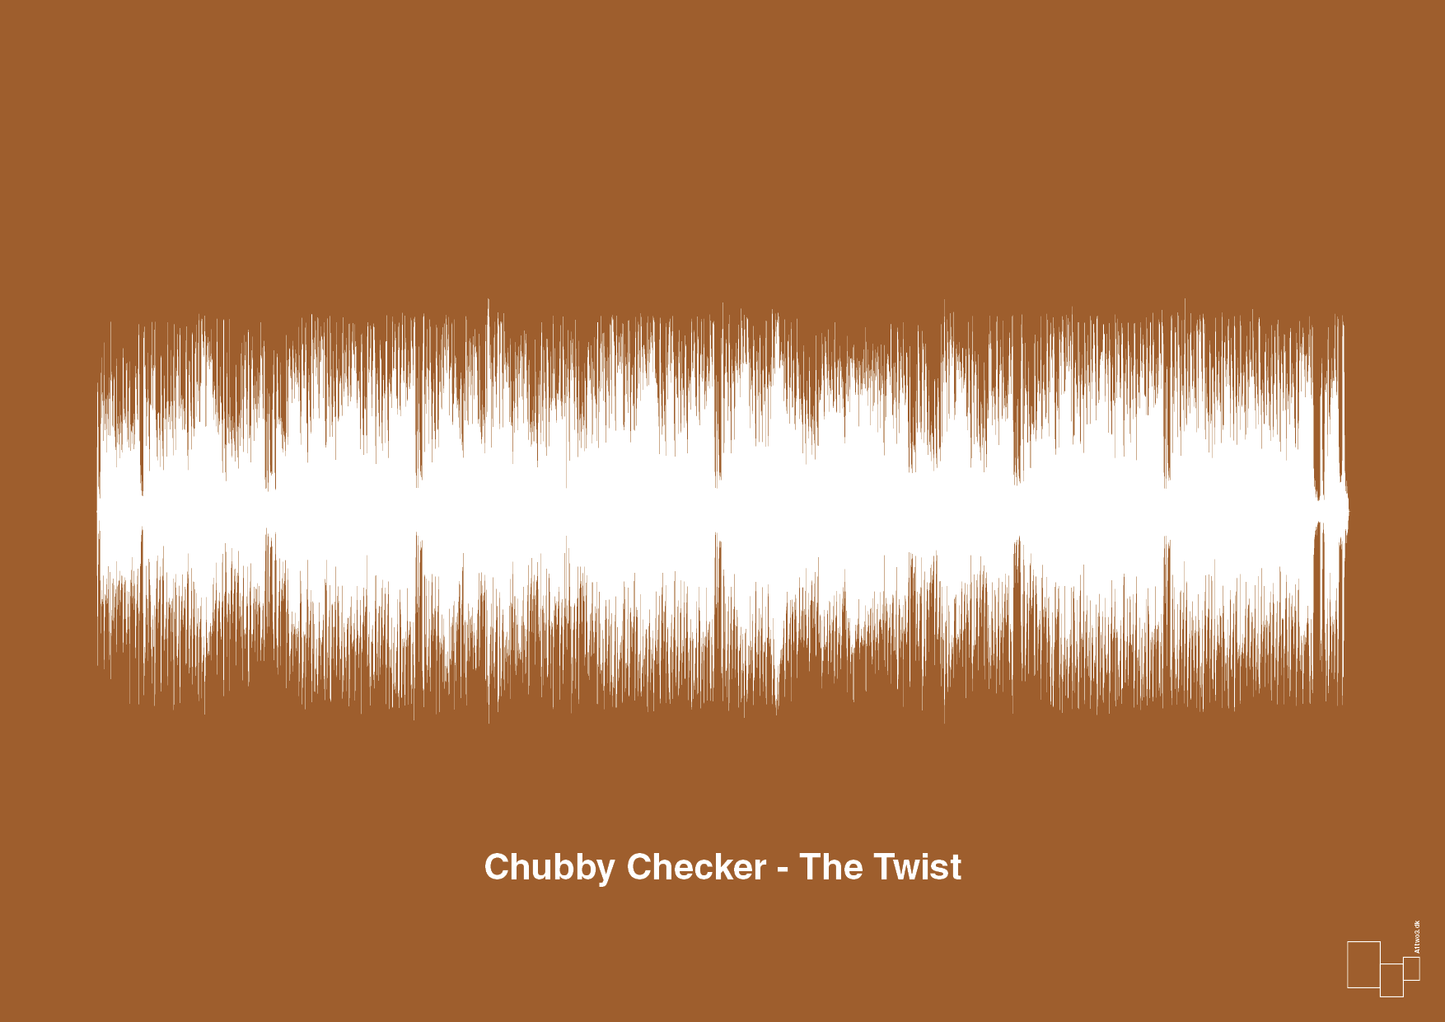 chubby checker - the twist - Plakat med Musik i Cognac